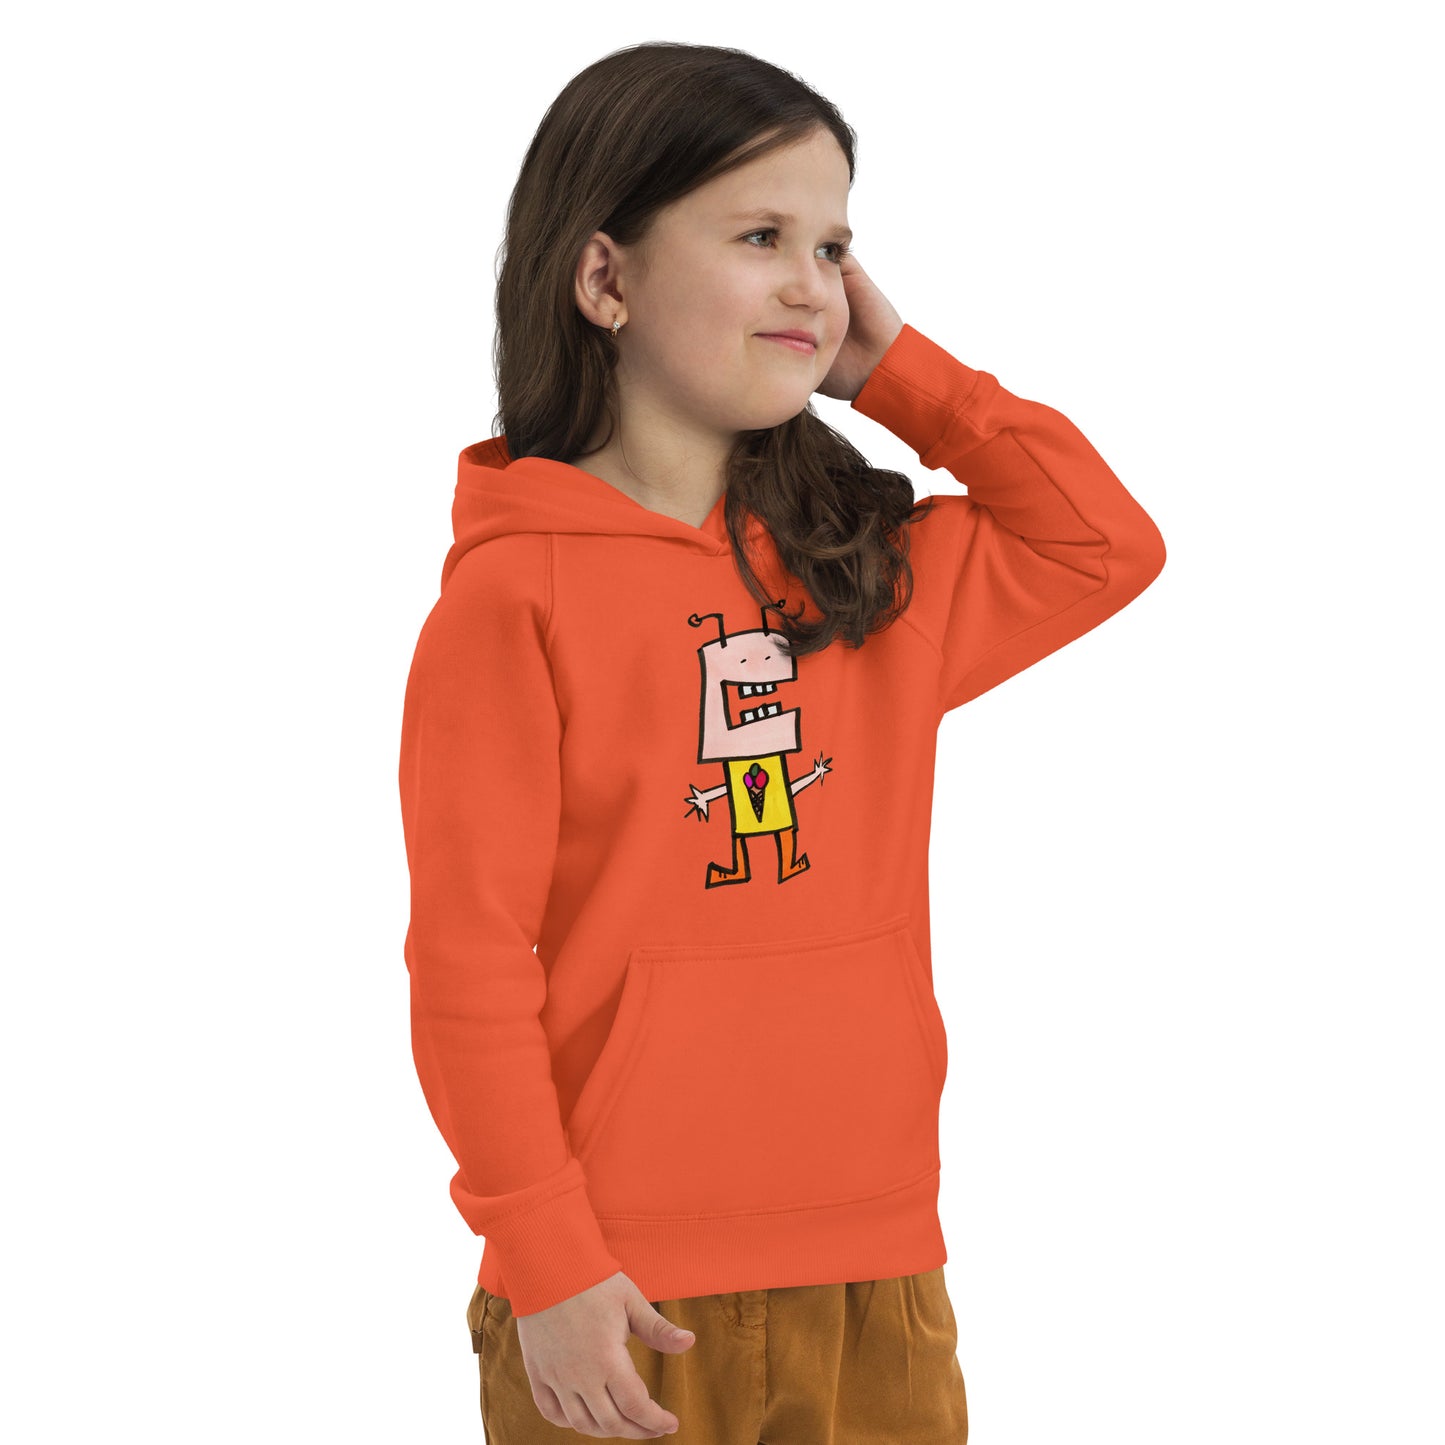 Kids eco hoodie - I Love Ice-cream THIS much